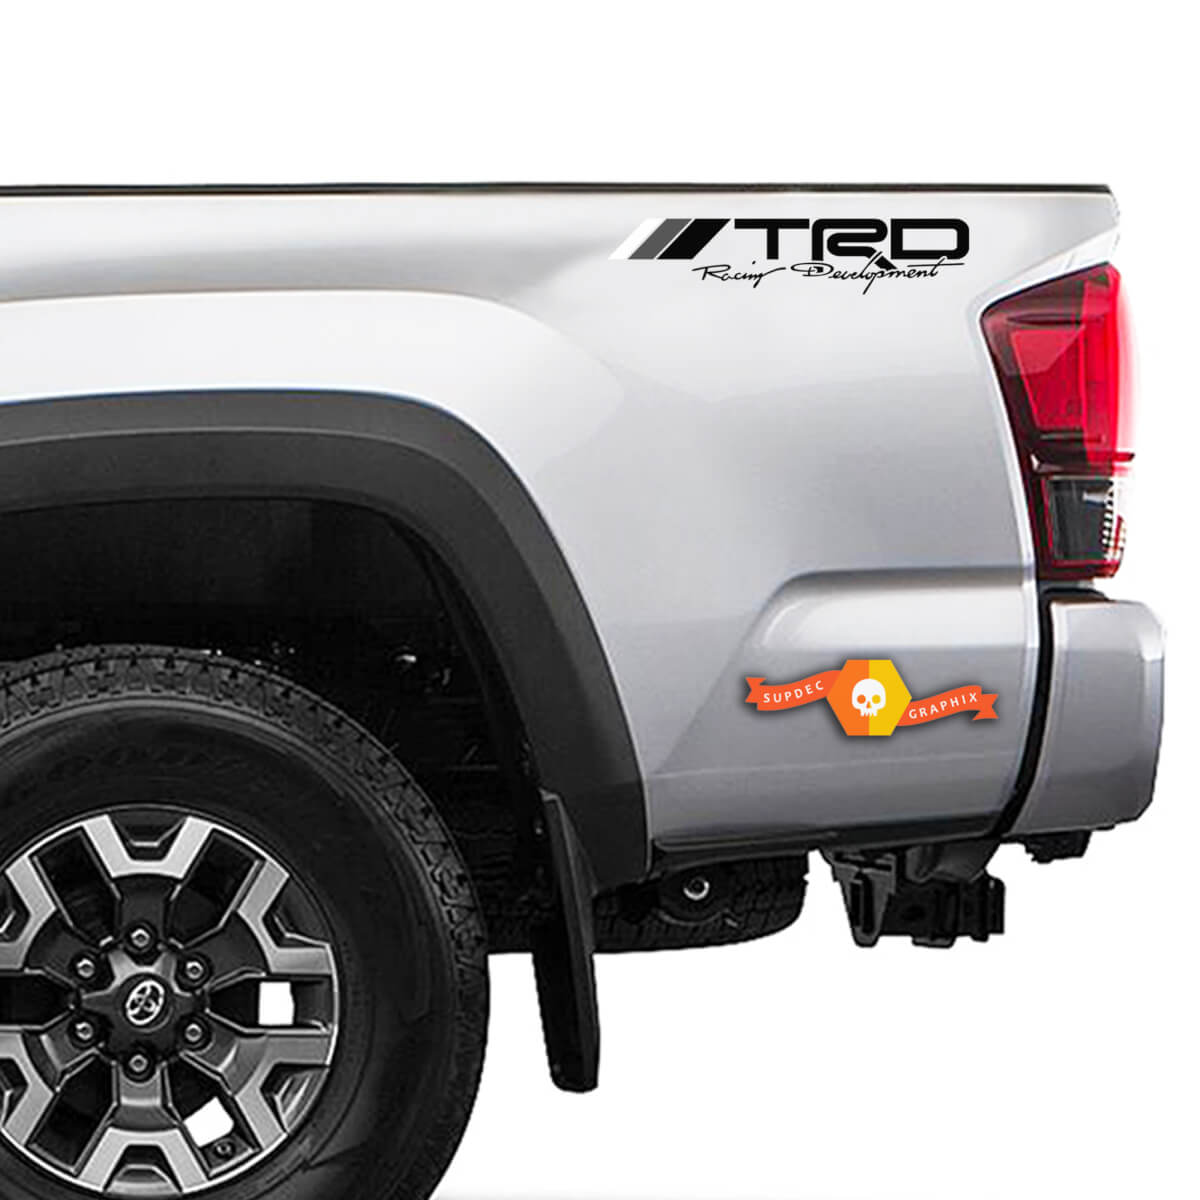 Paar Retro TRD Racing Development Decal Vinyl Truck Toyota Nachtaufkleber Tundra Tacoma 4Runner FJ Cruiser - Monochrom